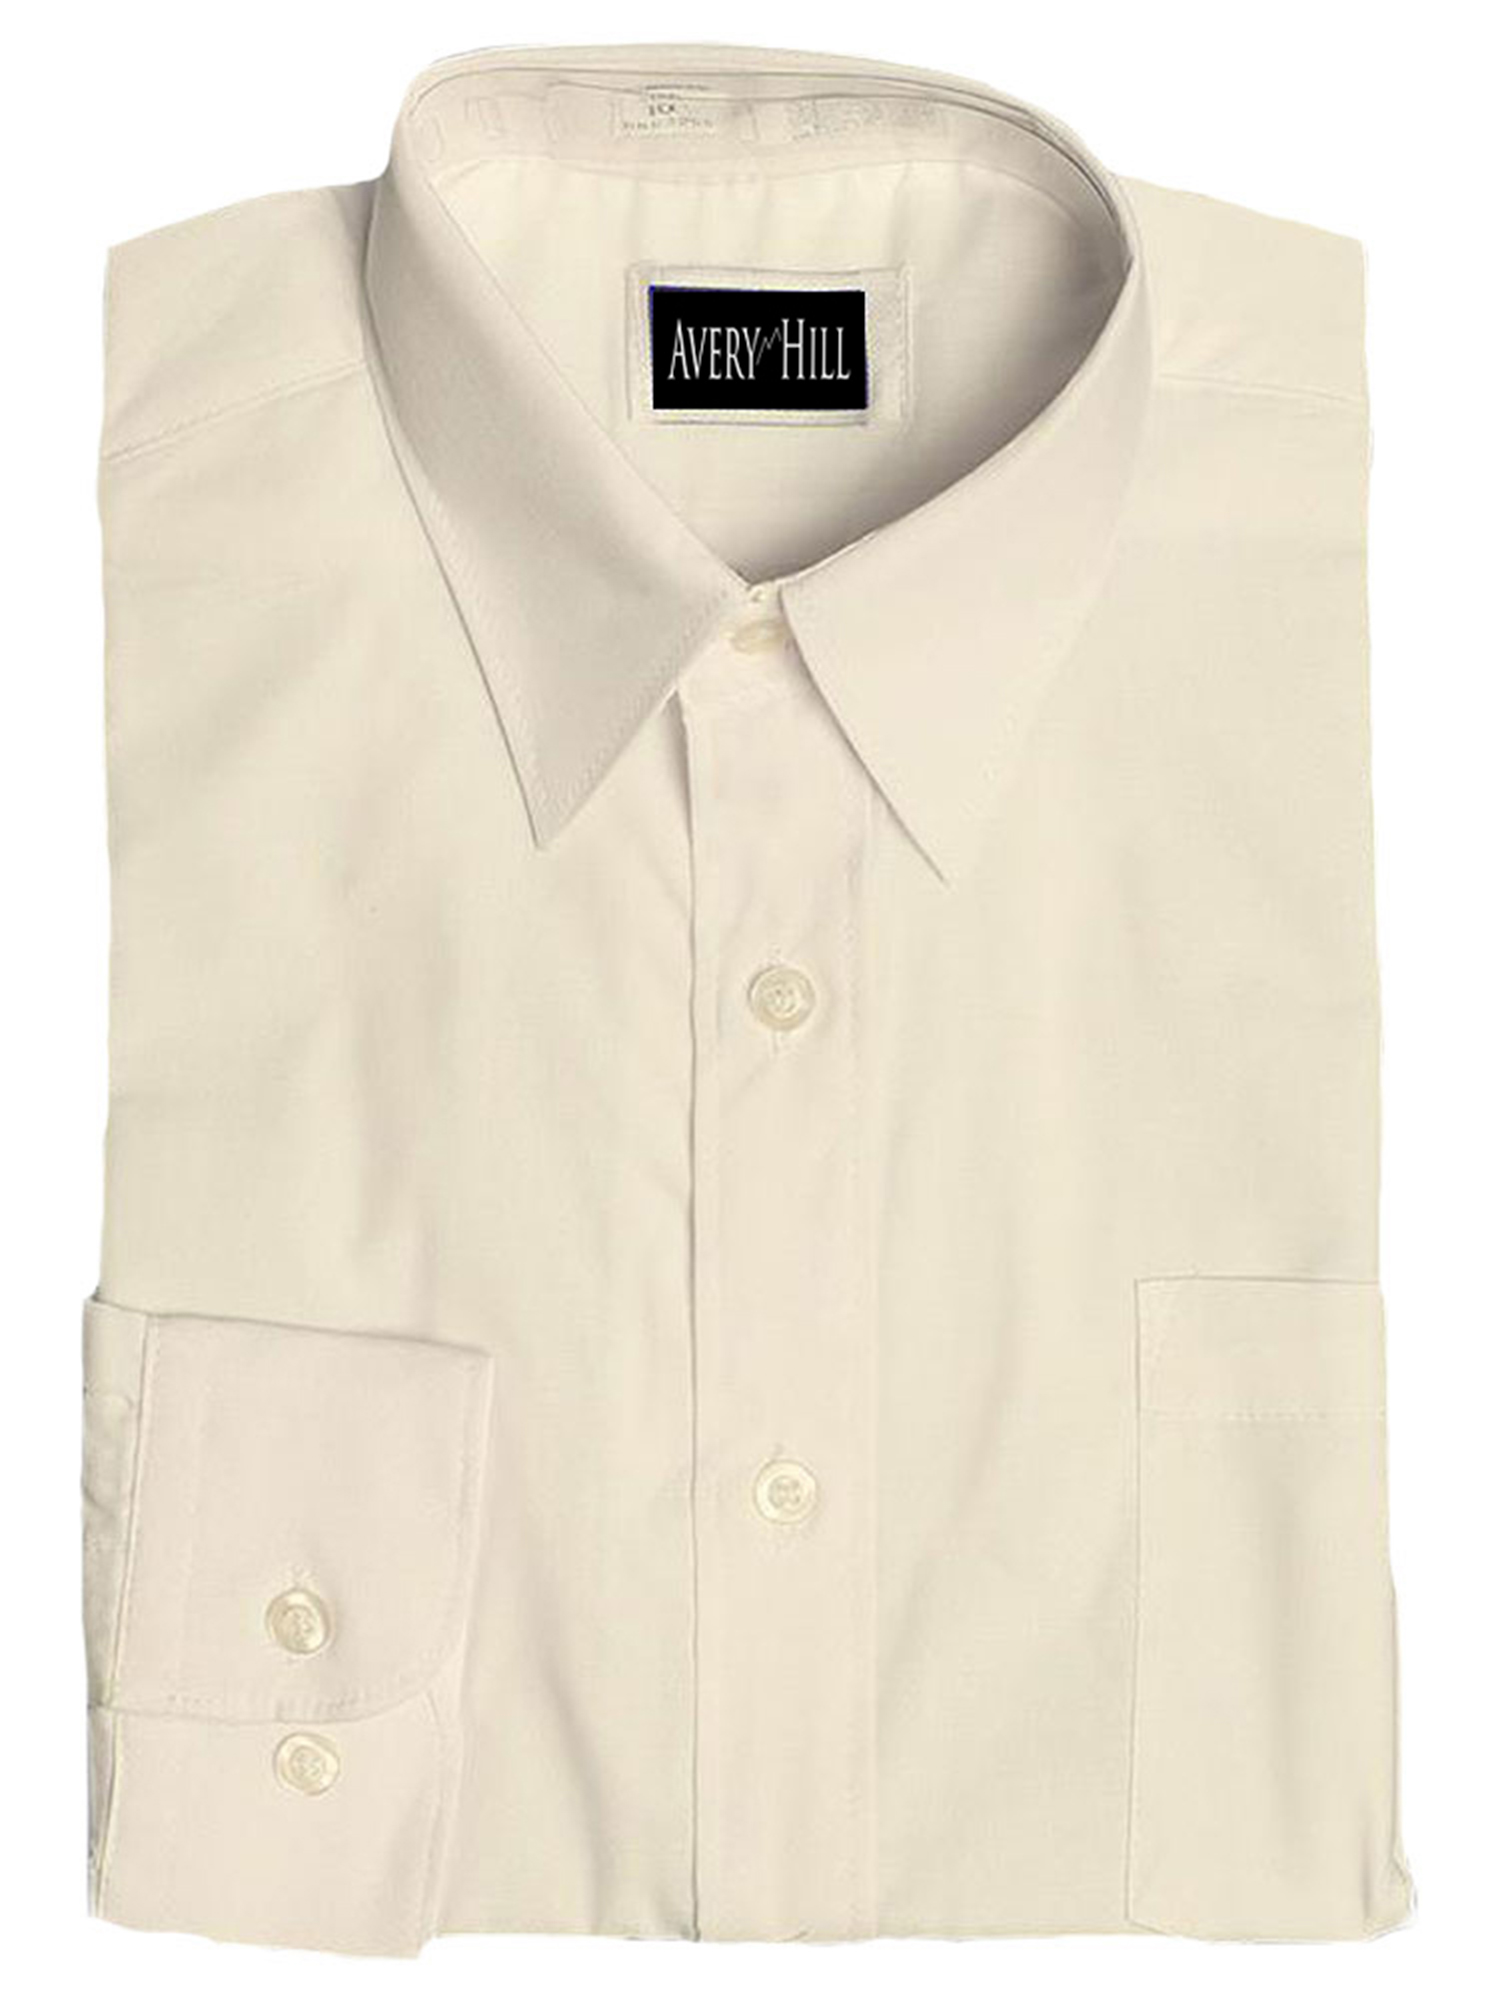 Boys White or Ivory Long Sleeve Wrinkle Resistant Dress Shirt IV 4